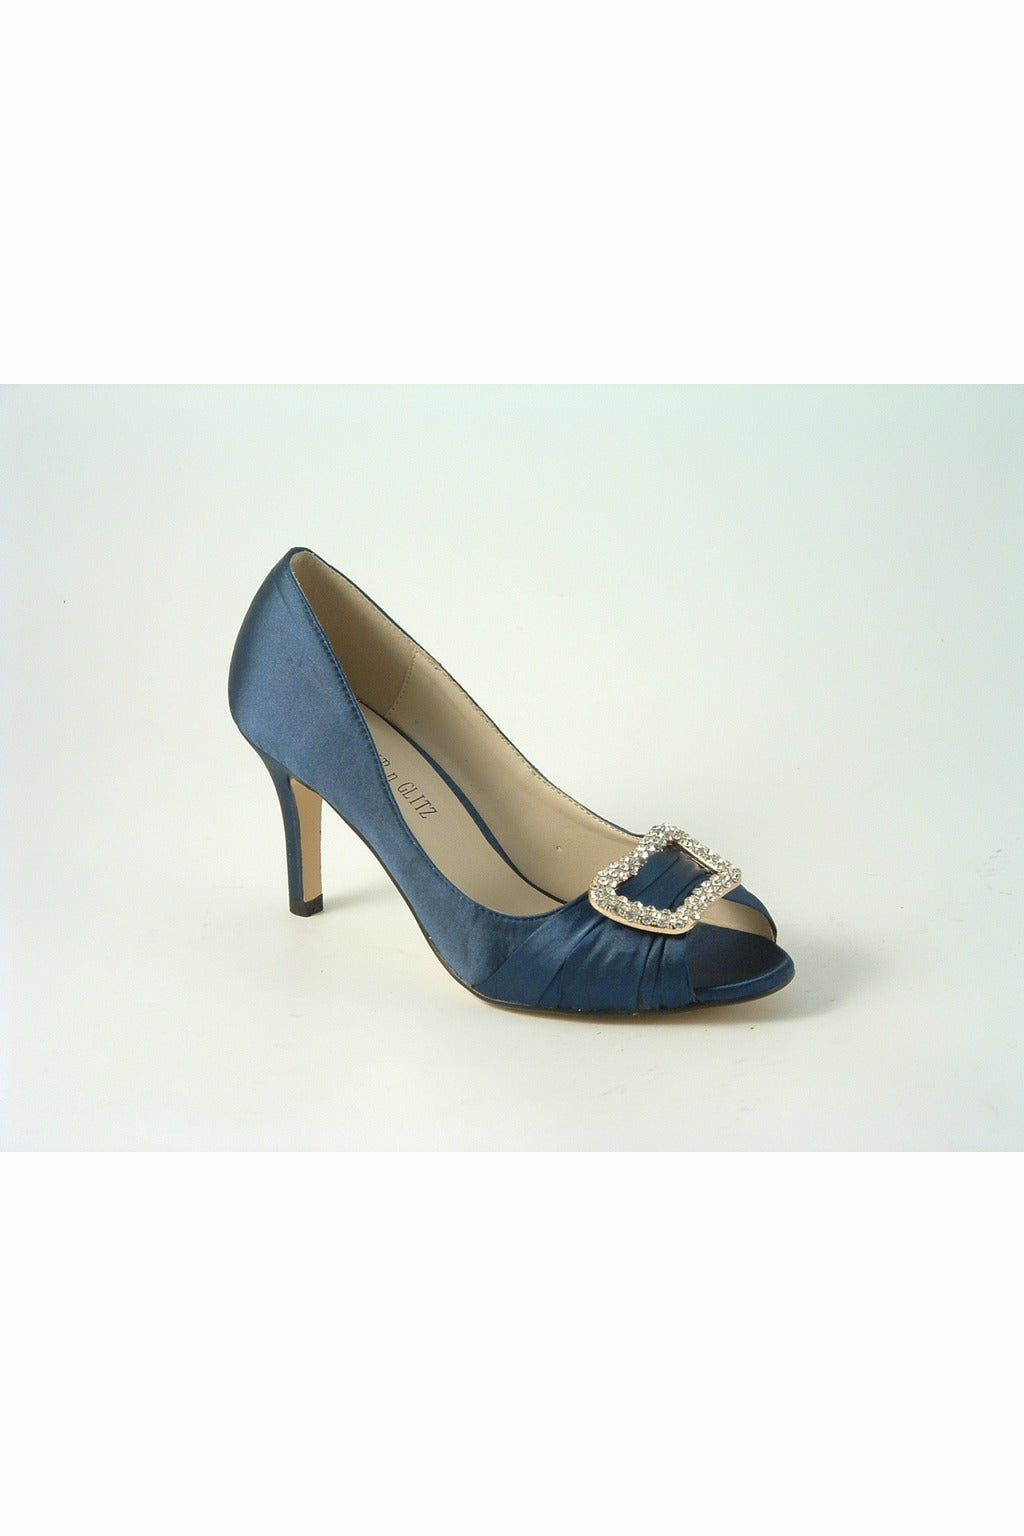 navy blue satin court shoes